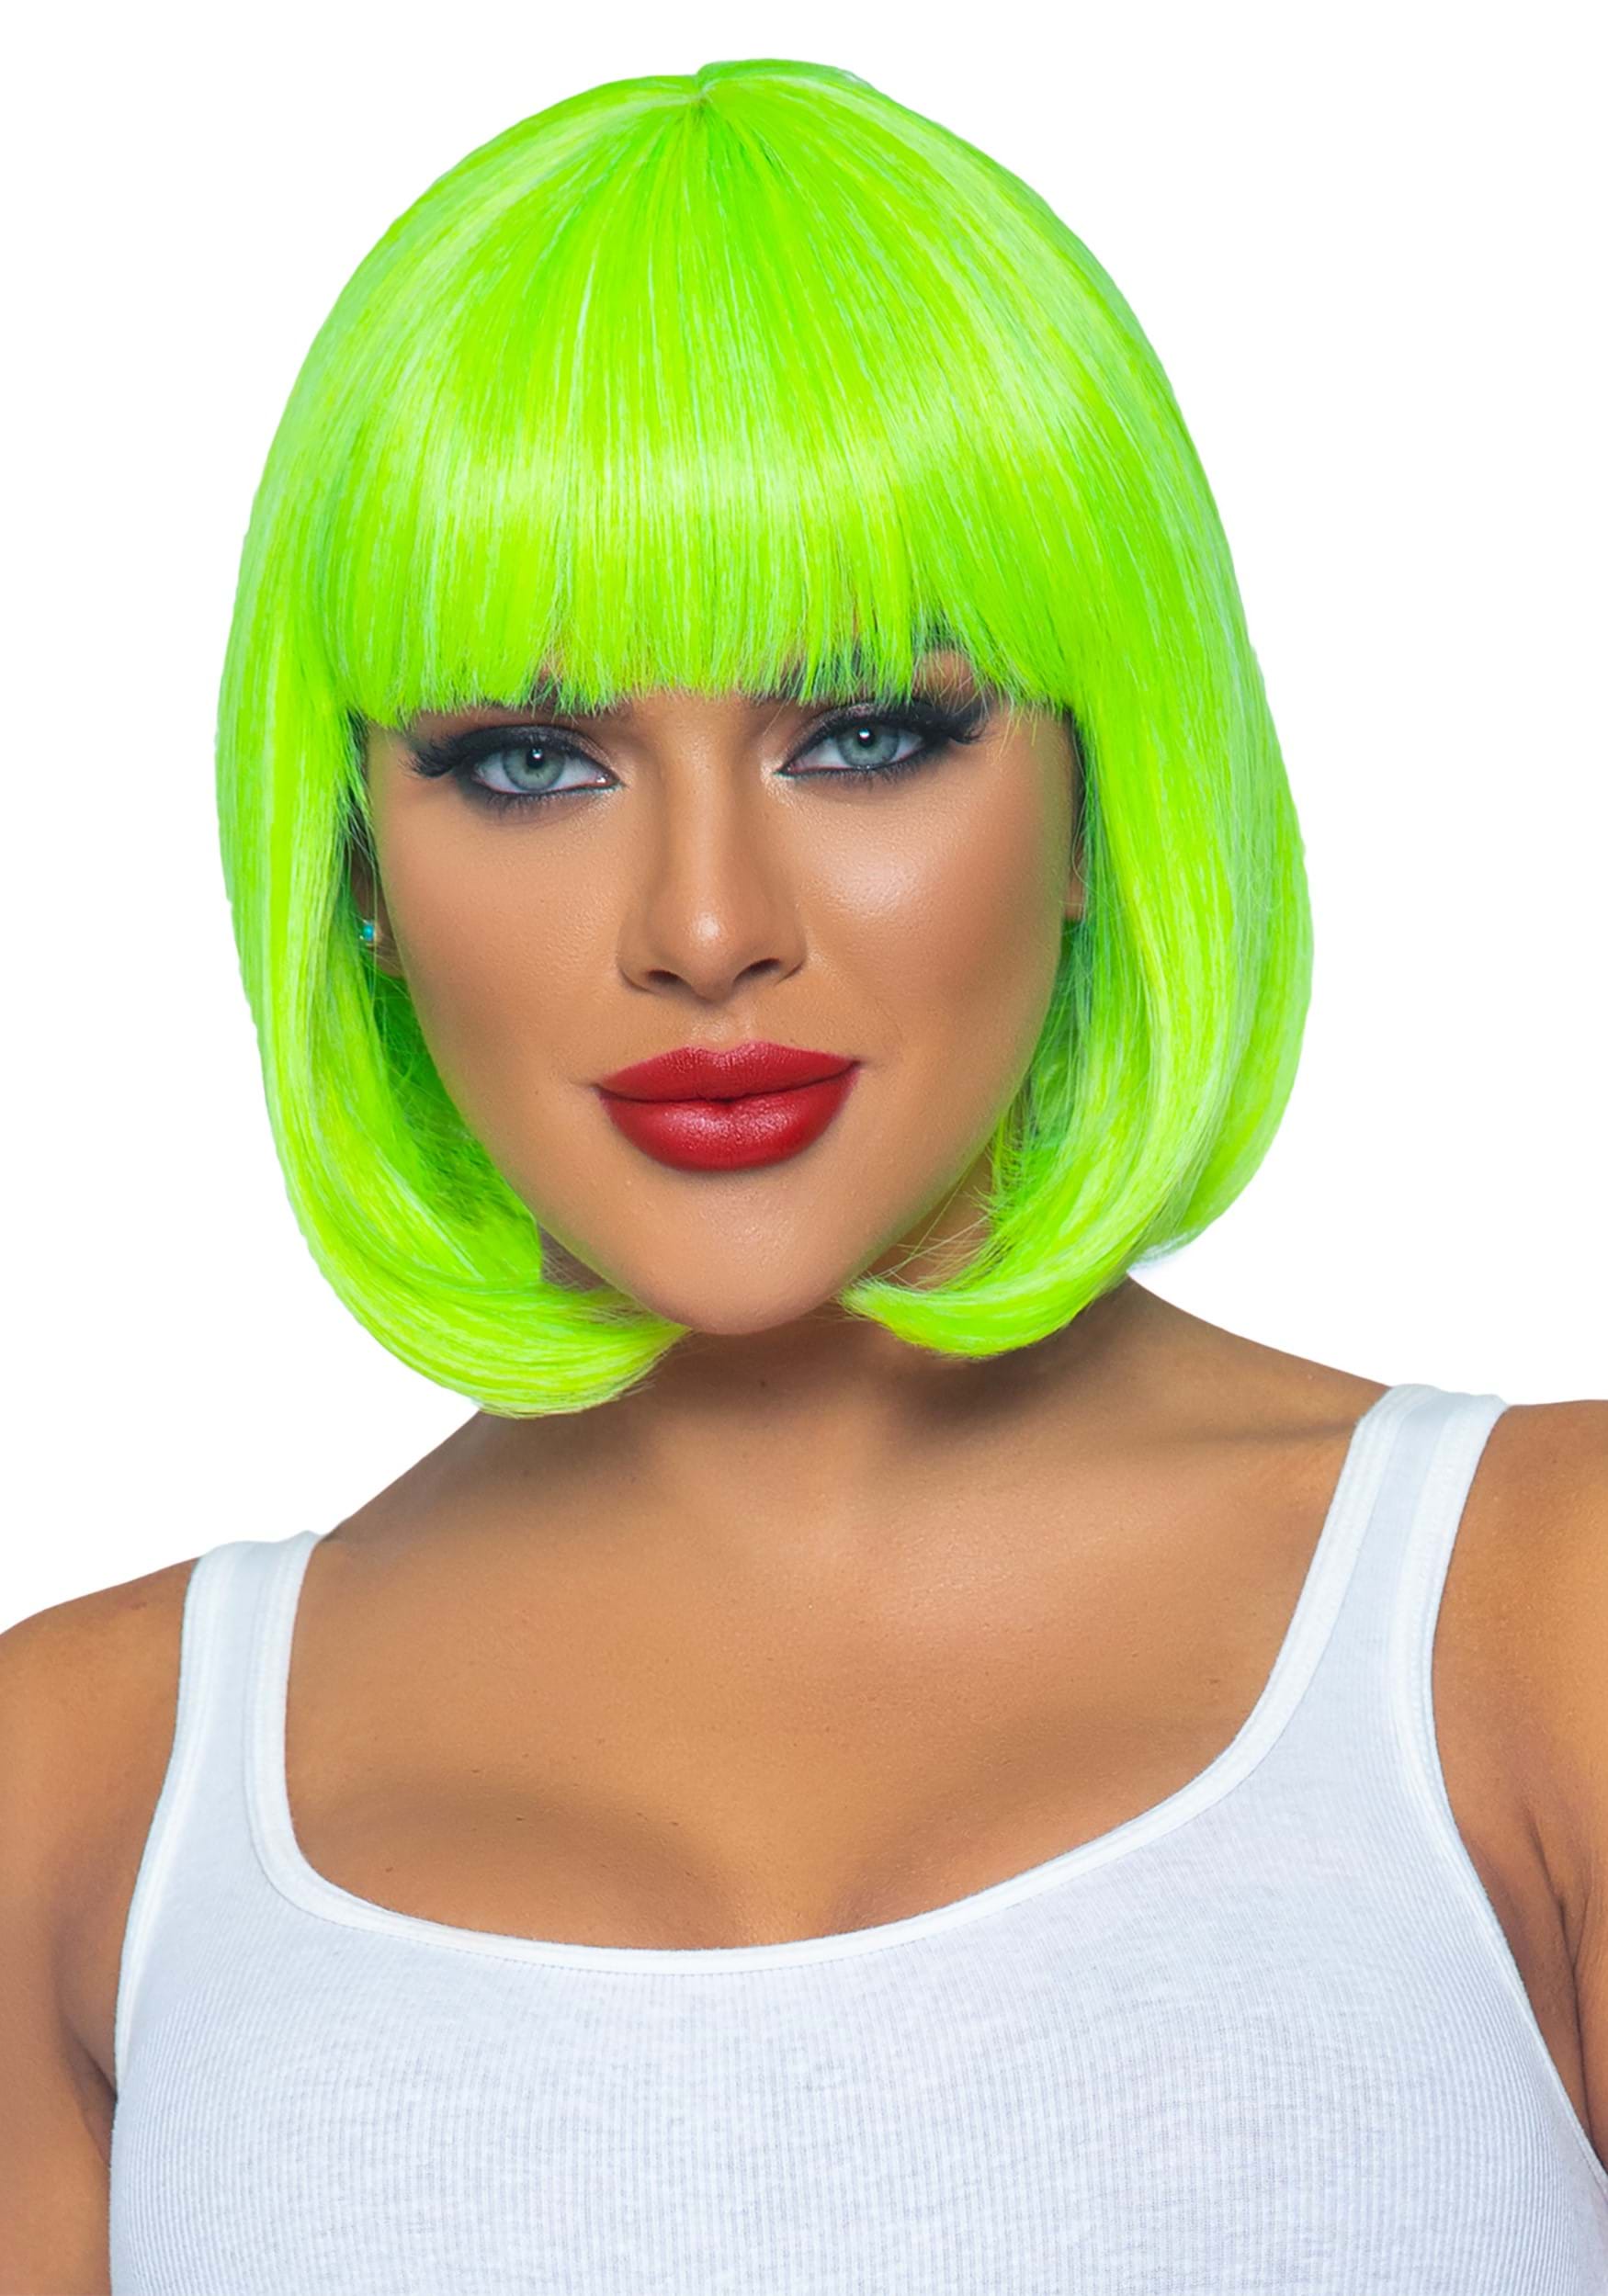 https://images.halloweencostumes.com/products/82953/1-1/neon-green-short-bob-wig.jpg